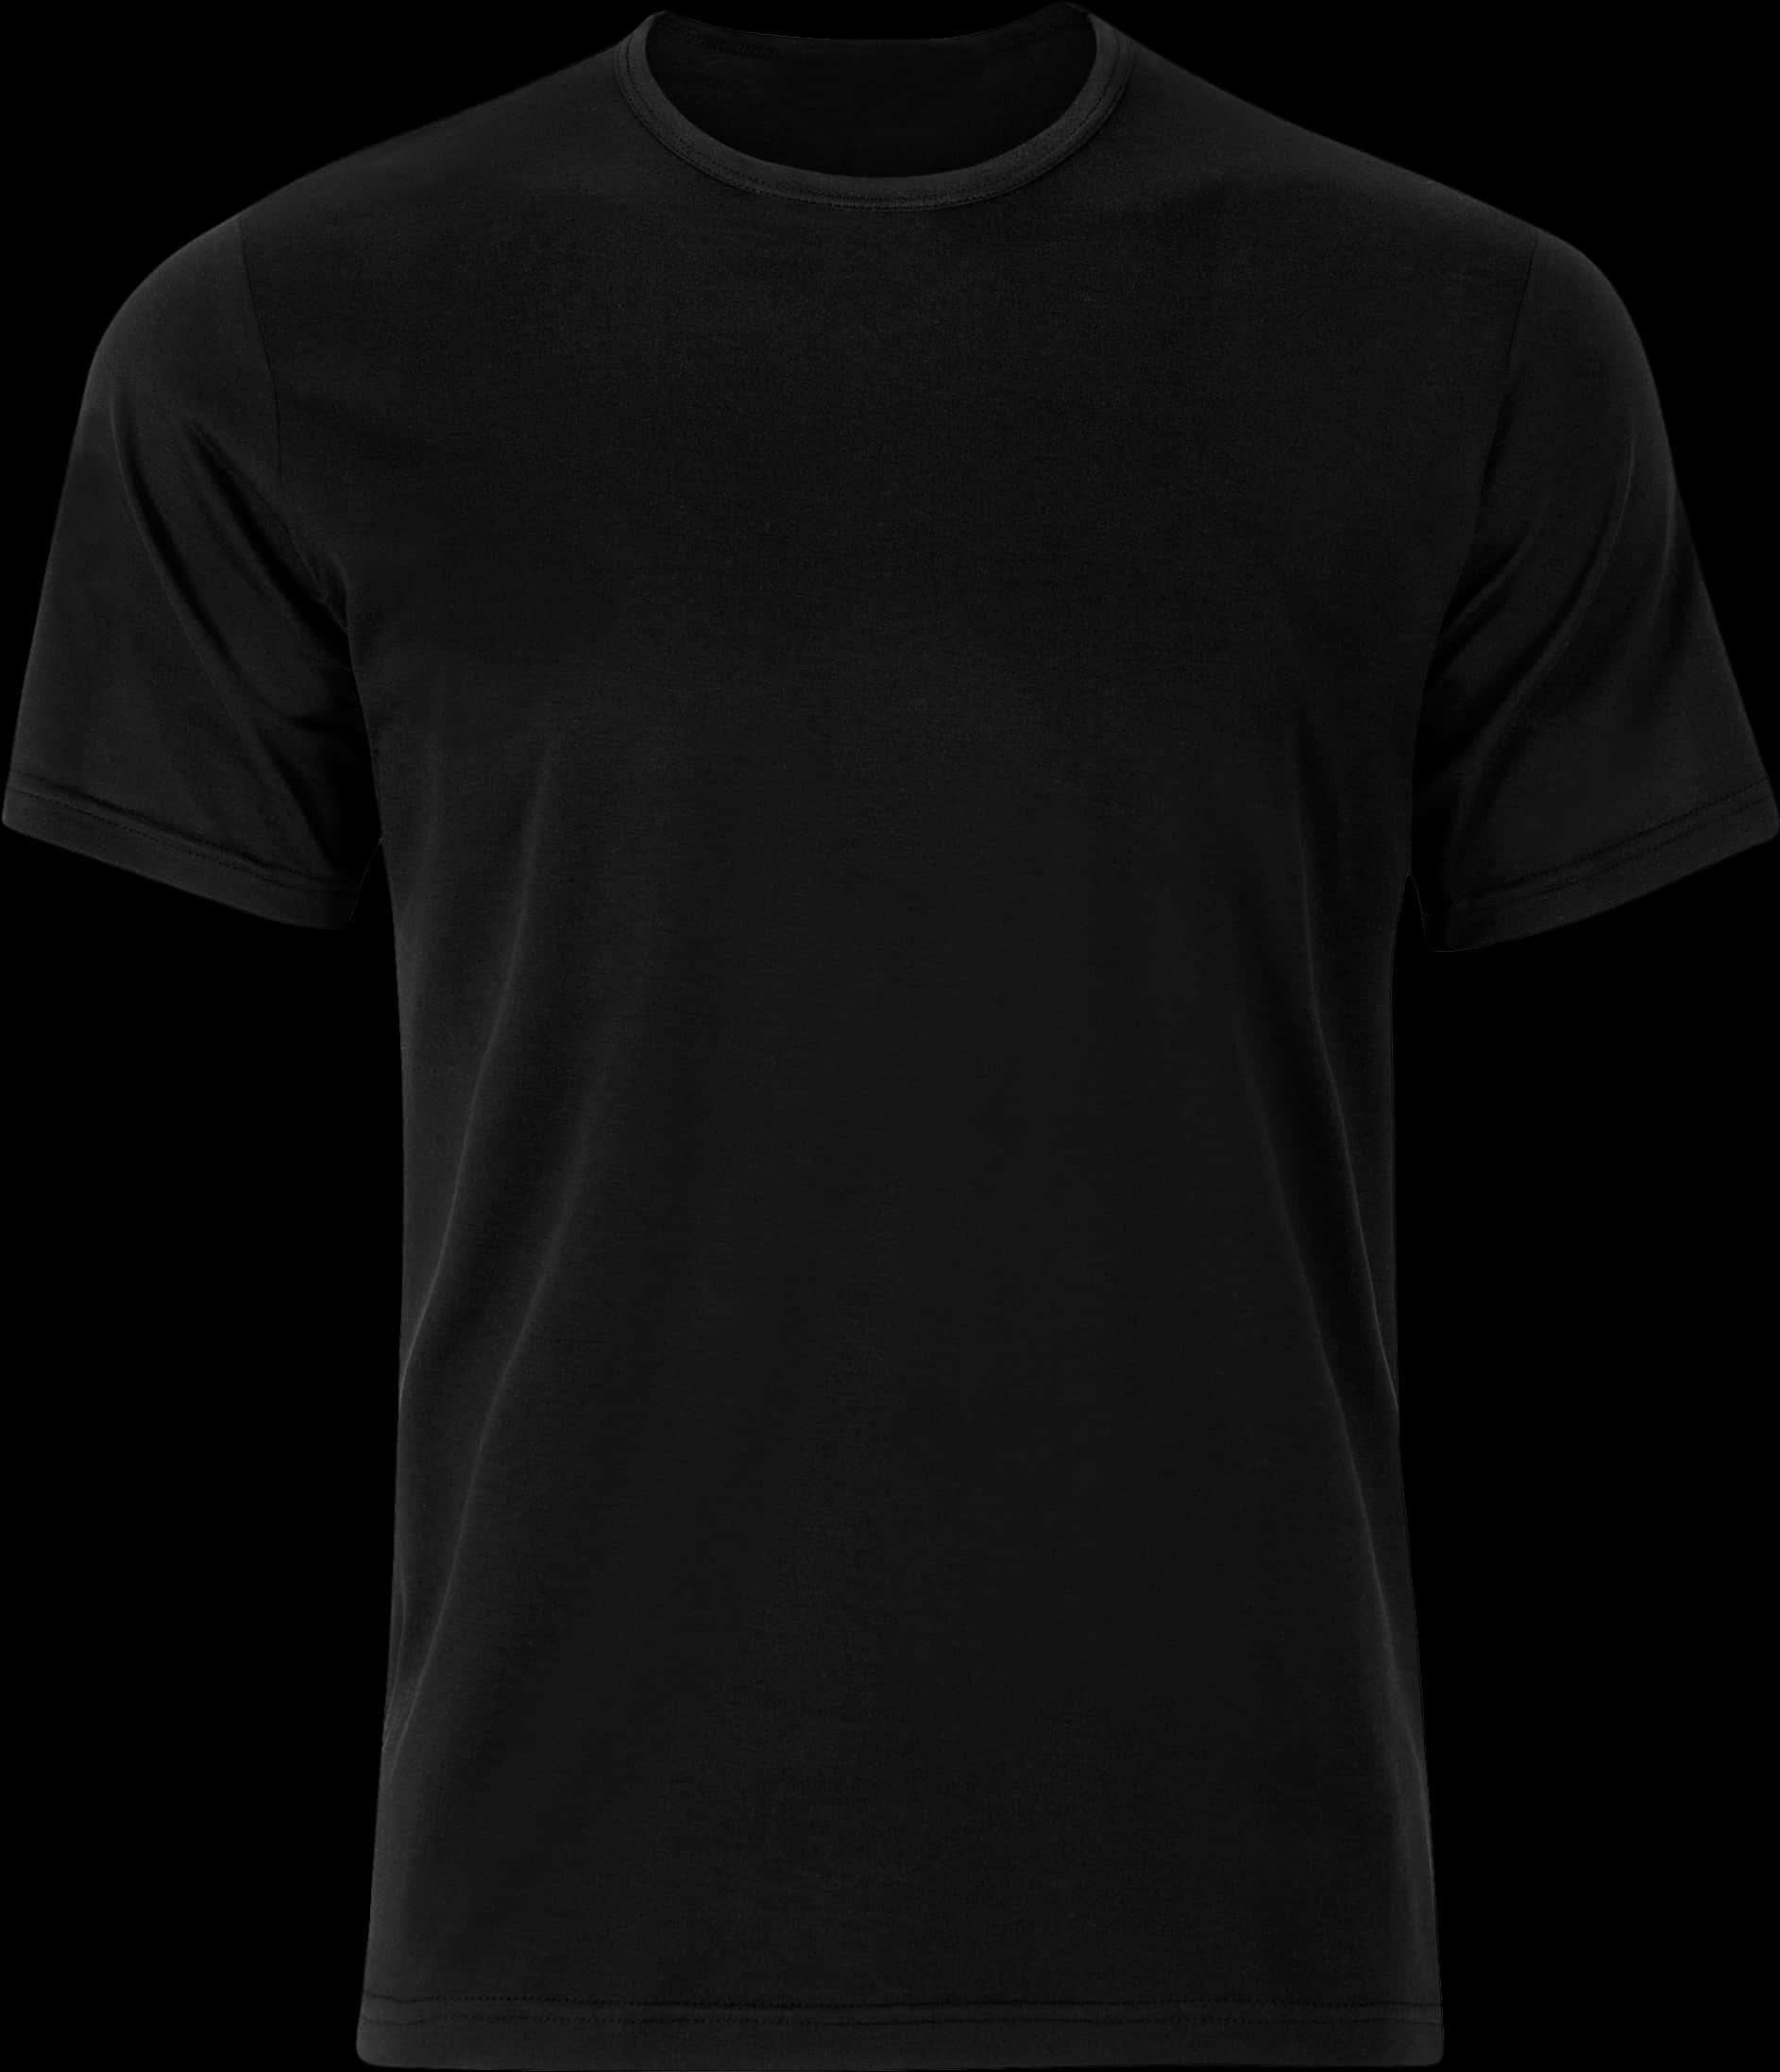 Black T Shirt Mockup PNG image